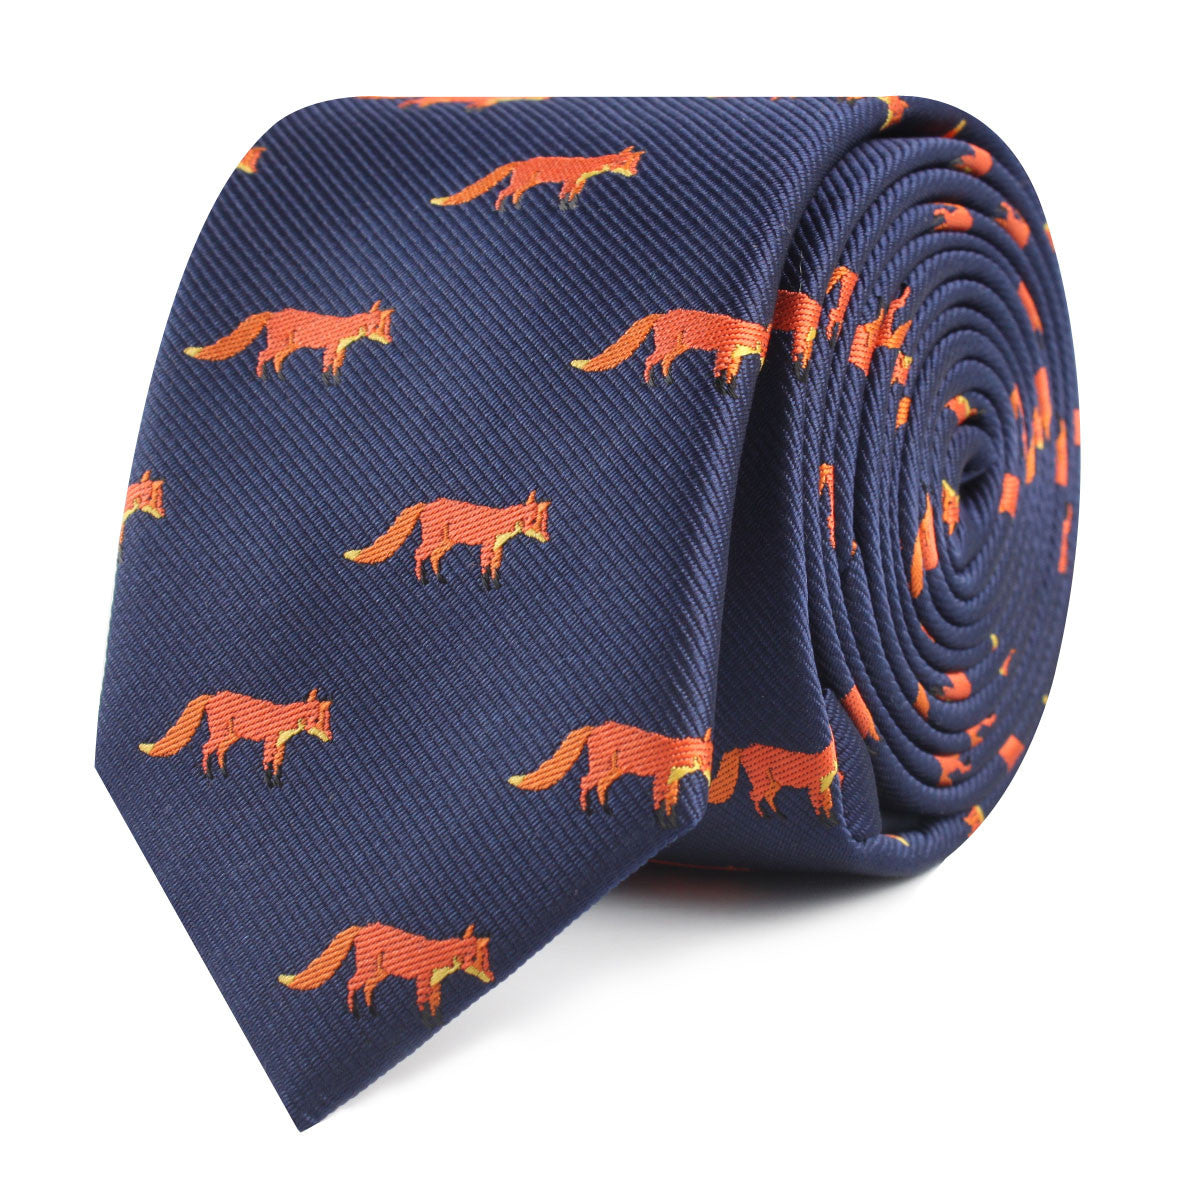 Mr Fox Slim Tie